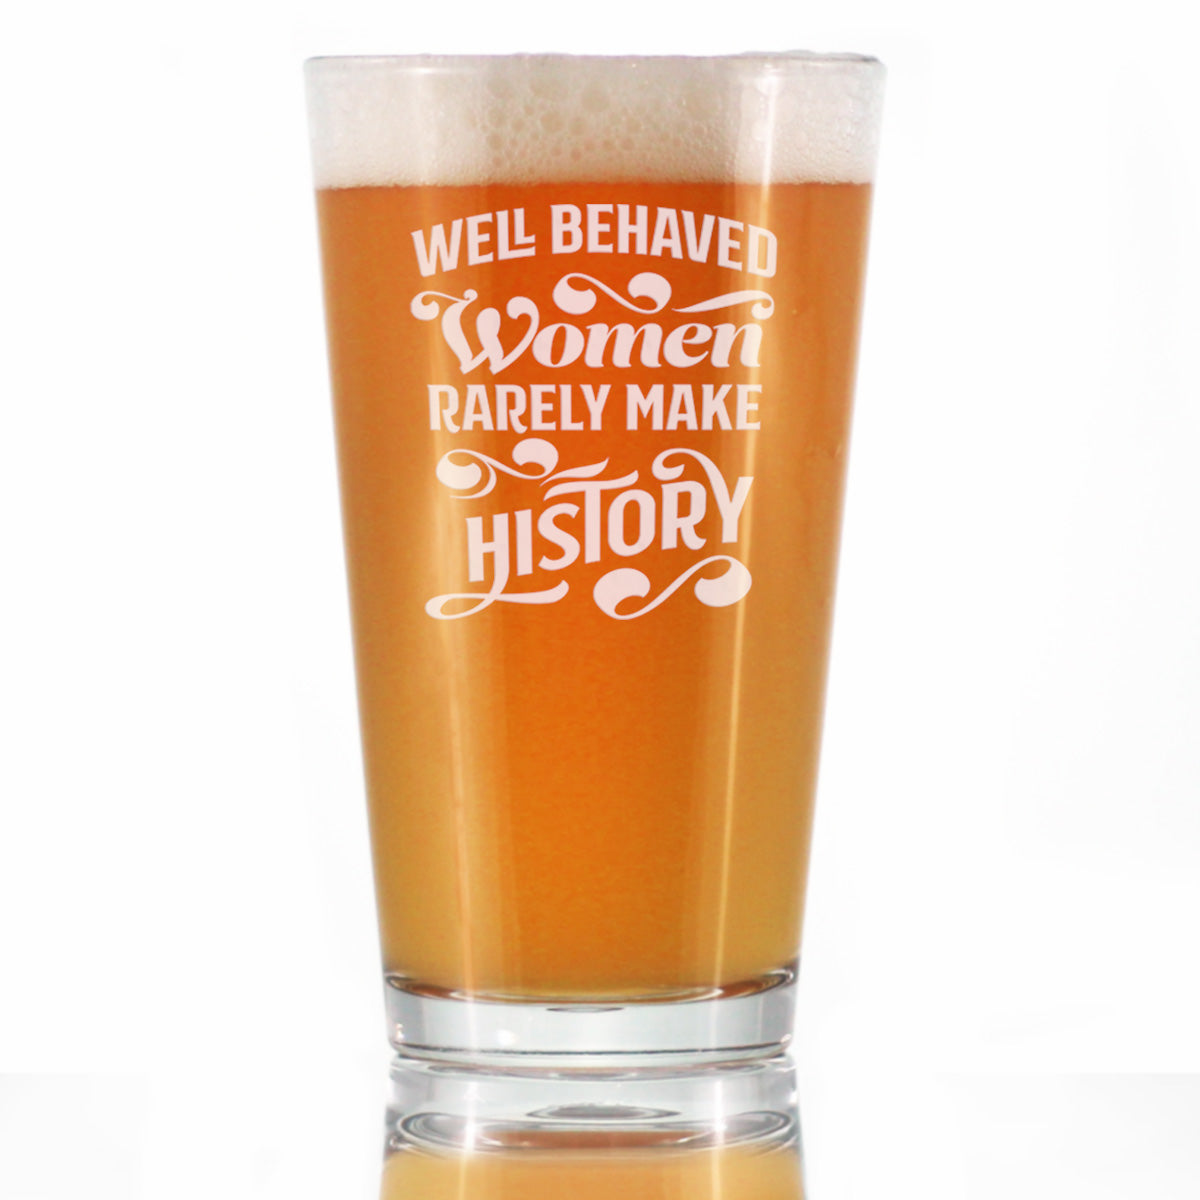 Well Behaved Women Rarely Make History Pint Glass for Beer - Funny Gift for Women - Cute Engraved Glasses for Girls - 16 oz